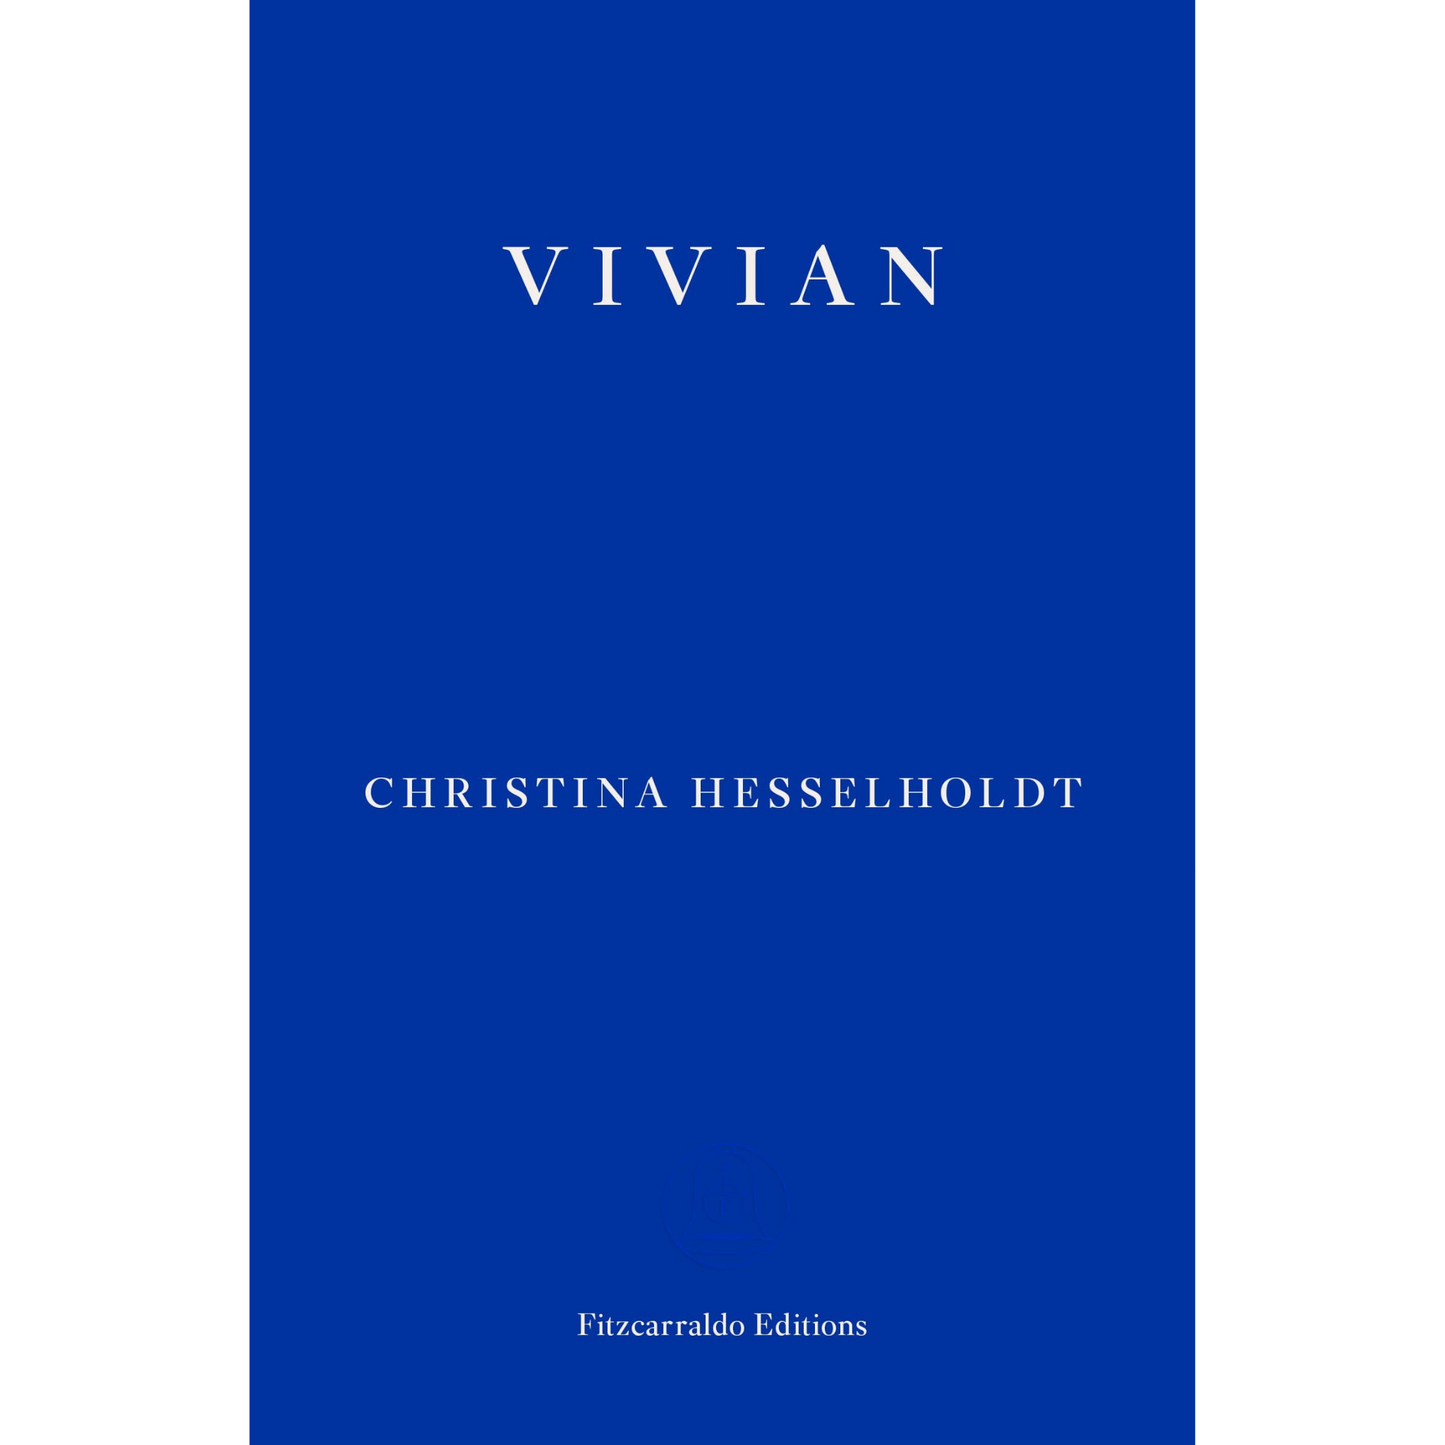 Vivian - Fitzcarraldo Editions